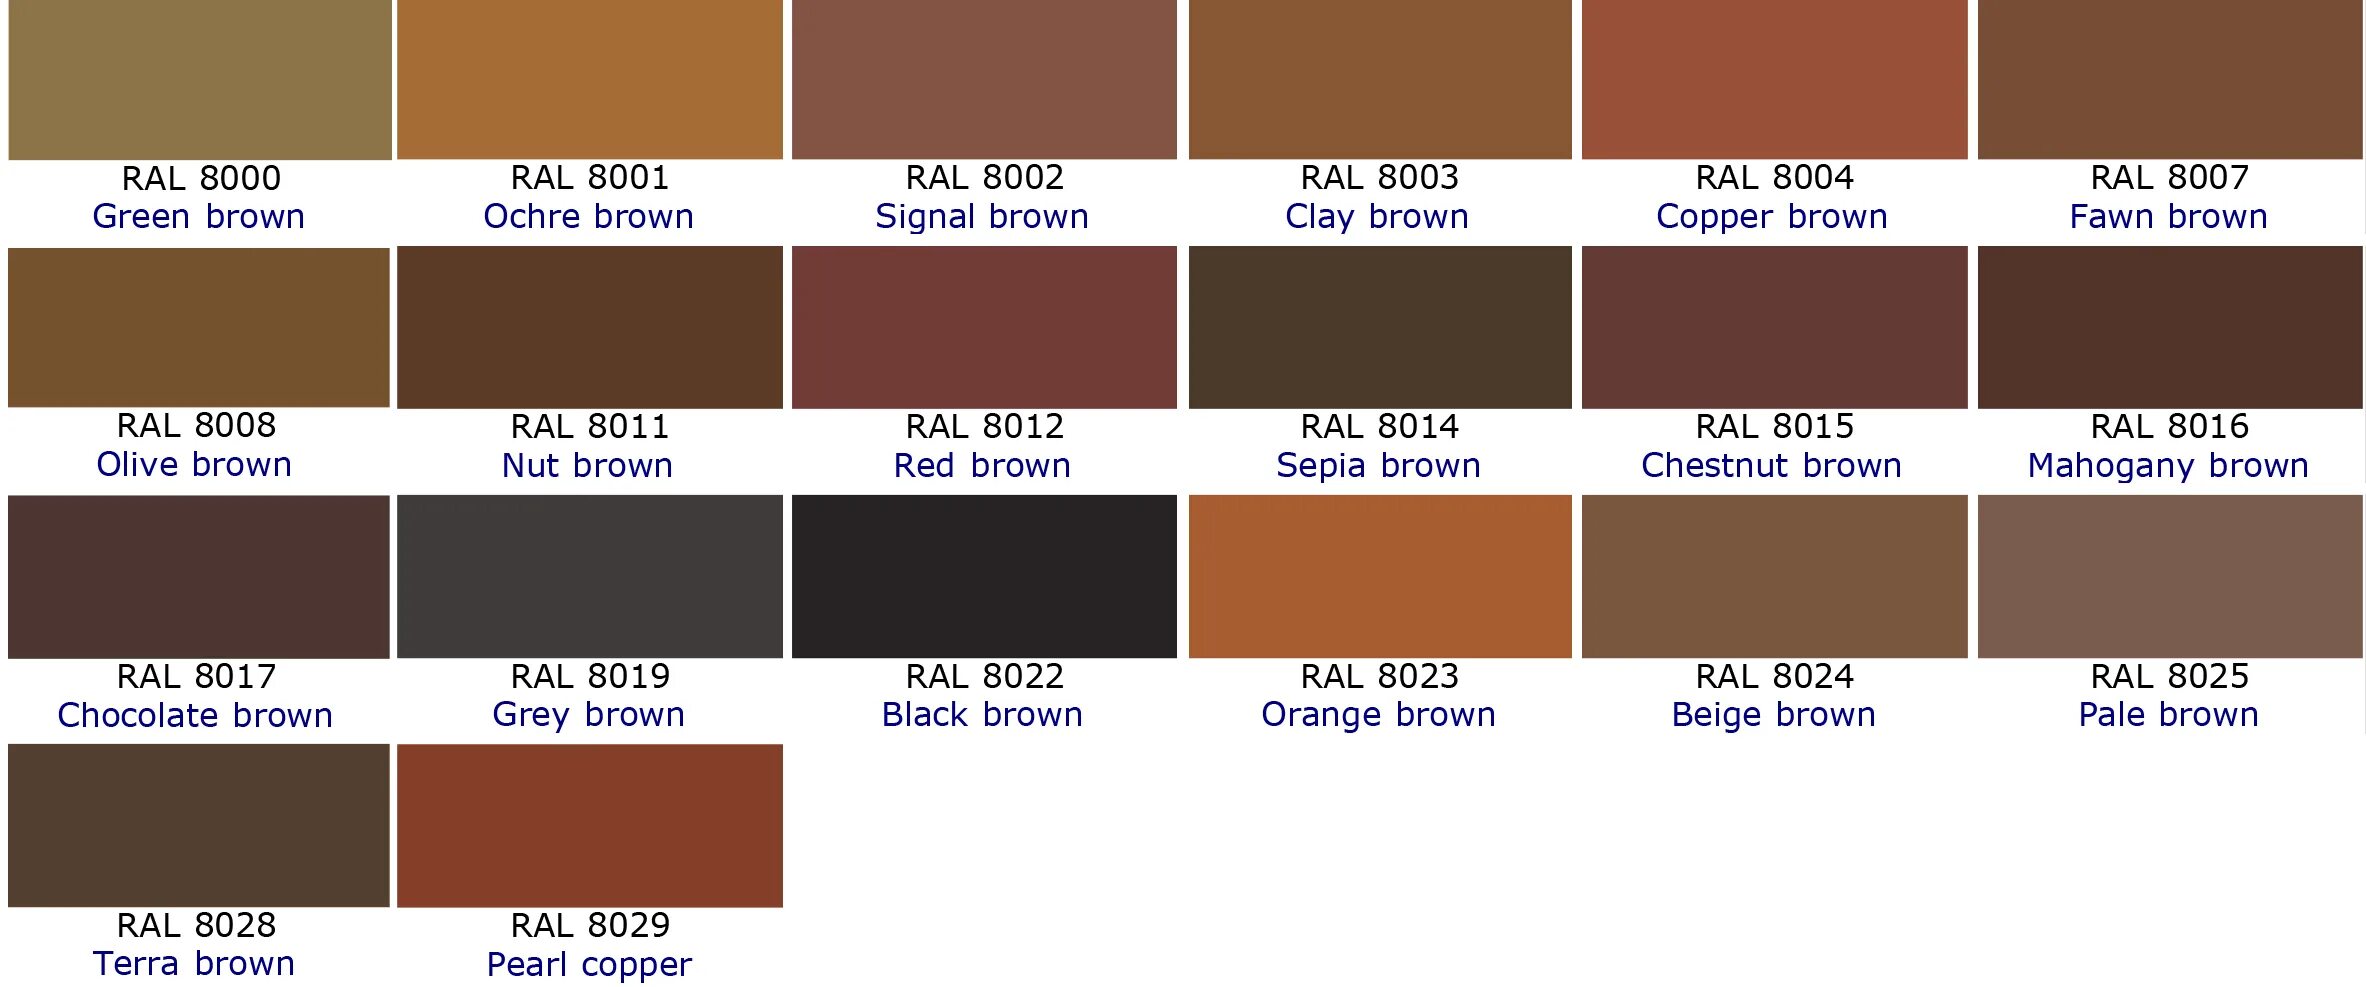 Brown какой цвет. Таблица RAL 8025. Рал 8025 и 8017. Порошковая краска рал 8017. RAL Classic 8001 - охра коричневая.